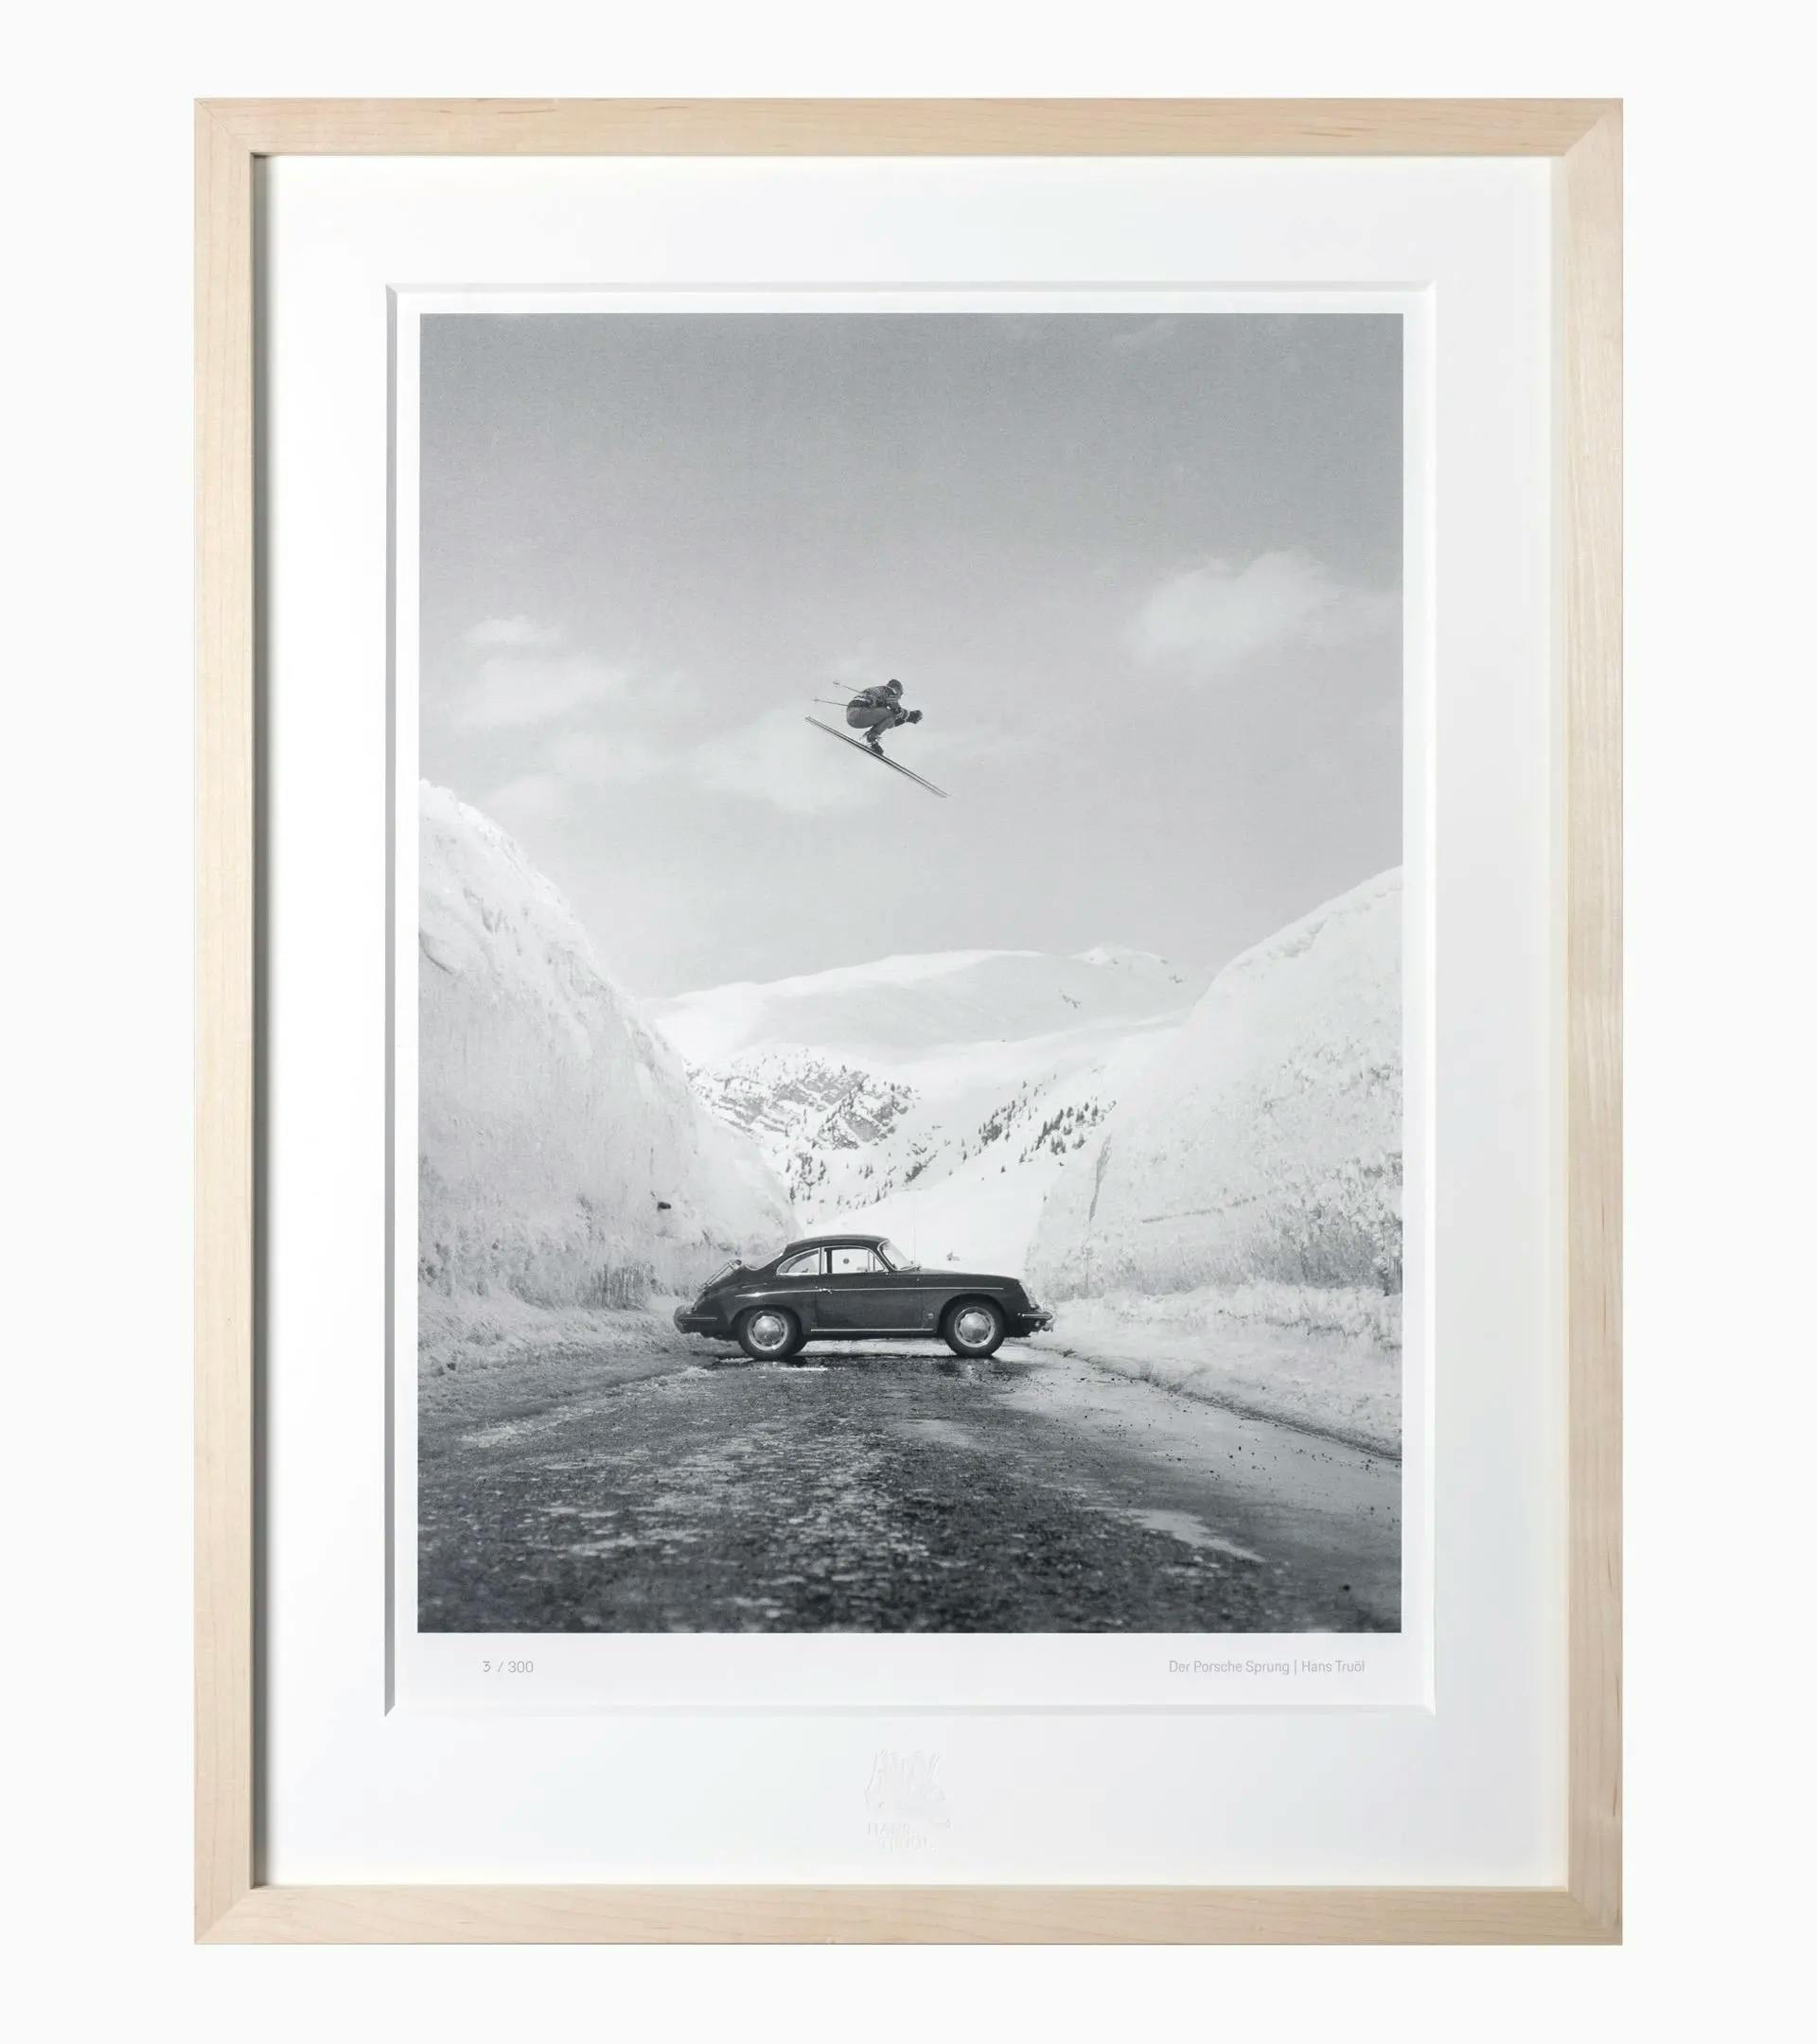 'The Porsche Jump' image set 2